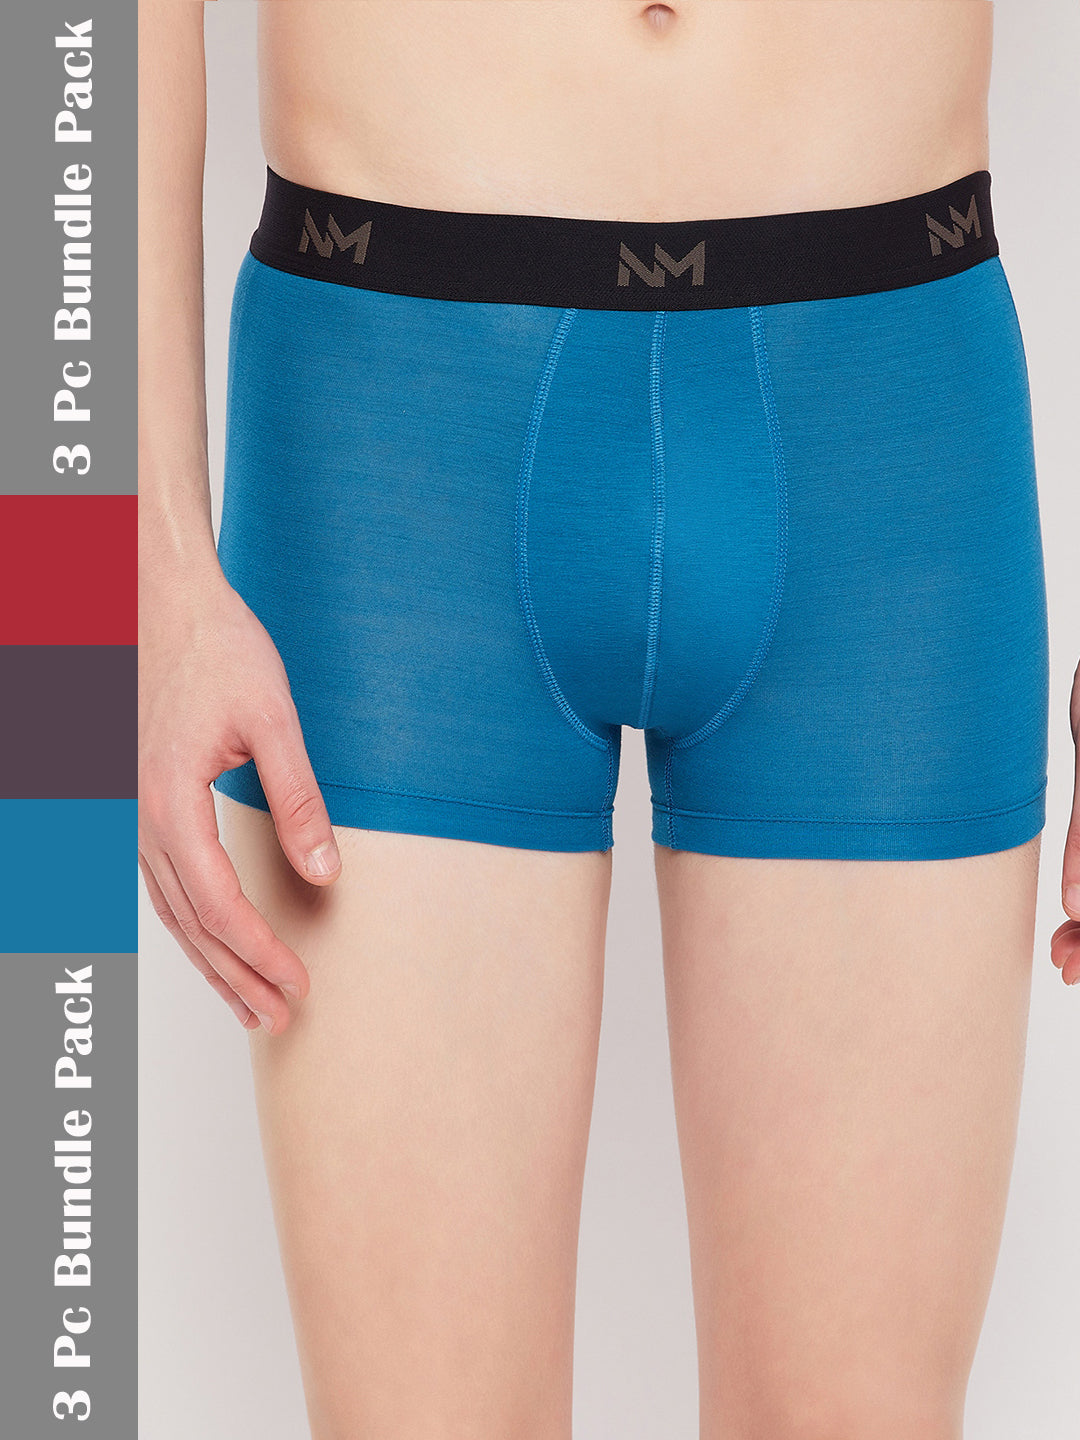 neva solid short trunk underwear for men